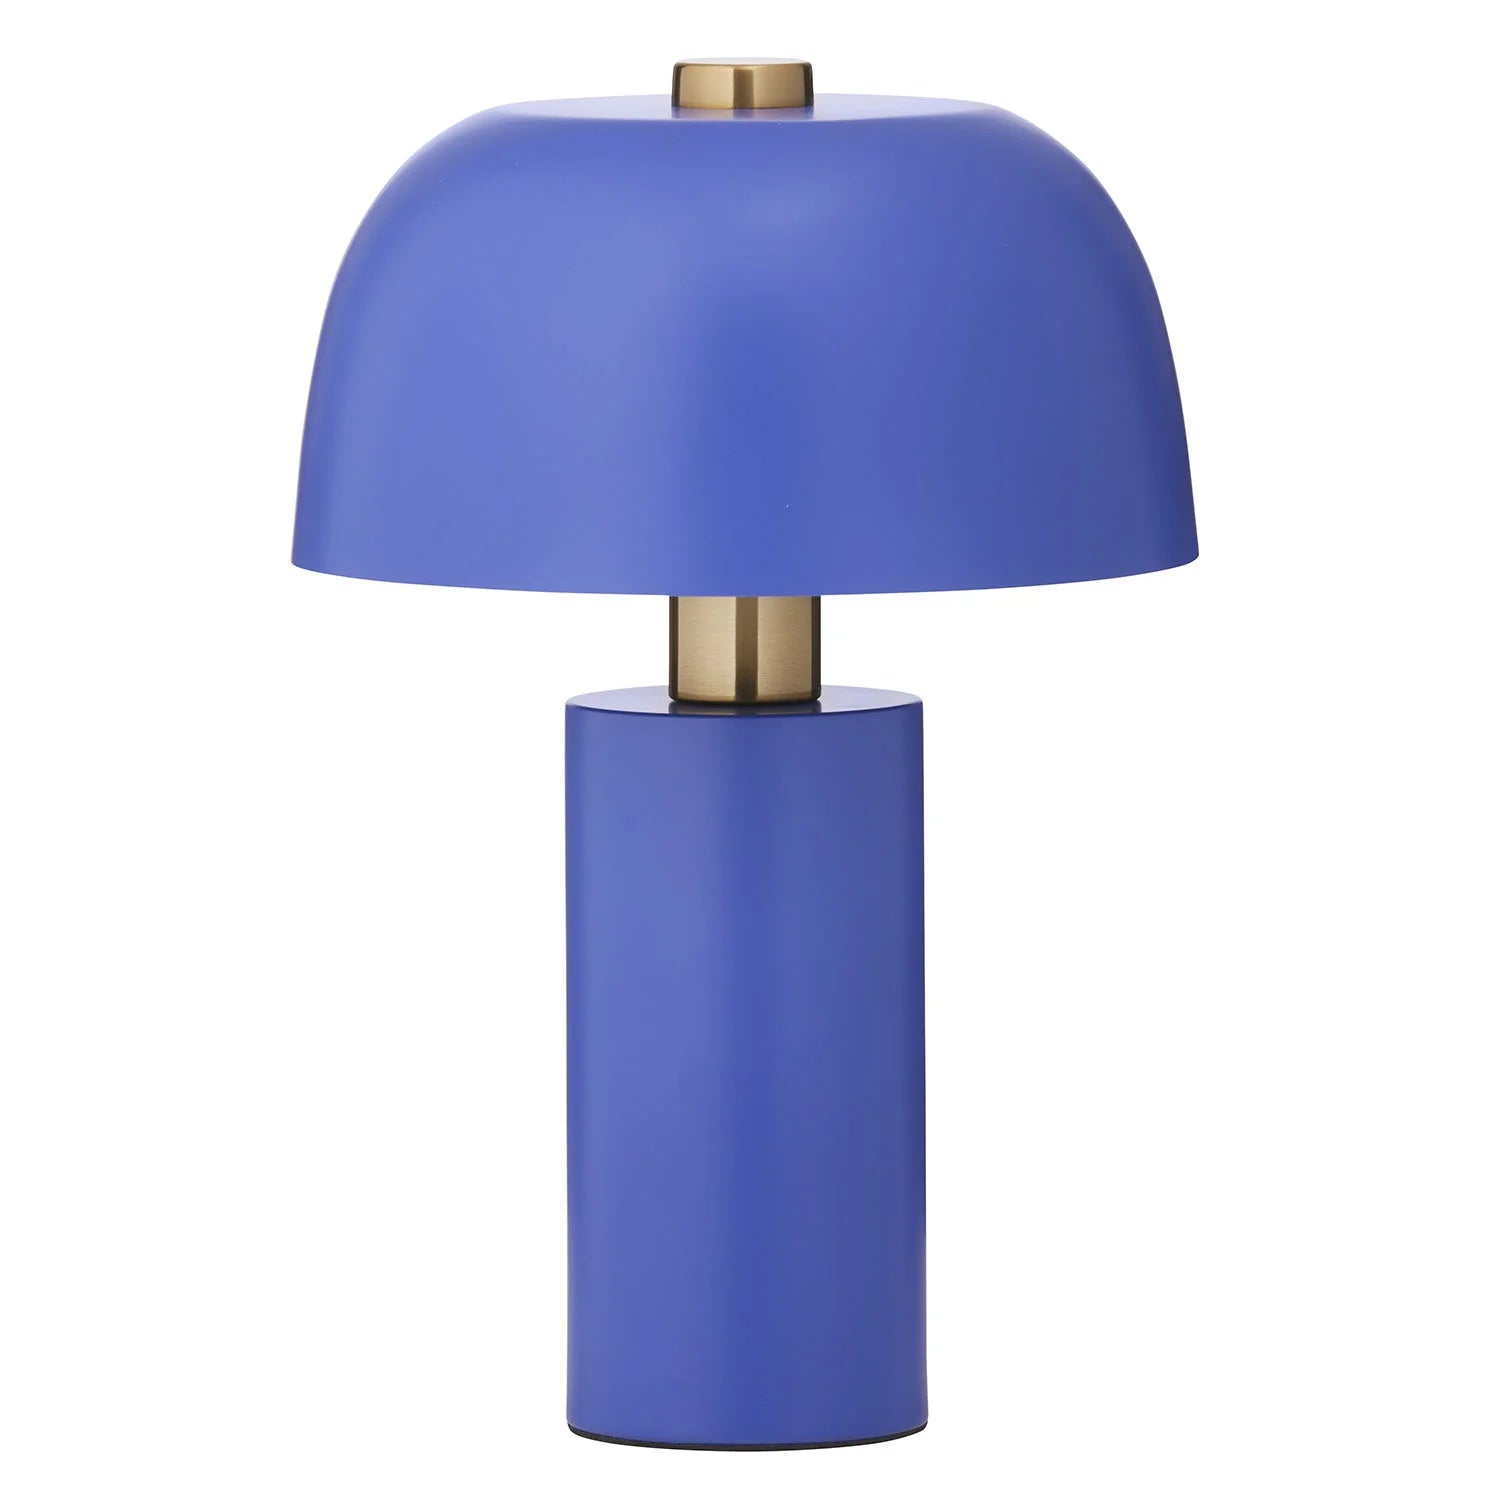 Lulu Lamp - COBALT BLUE